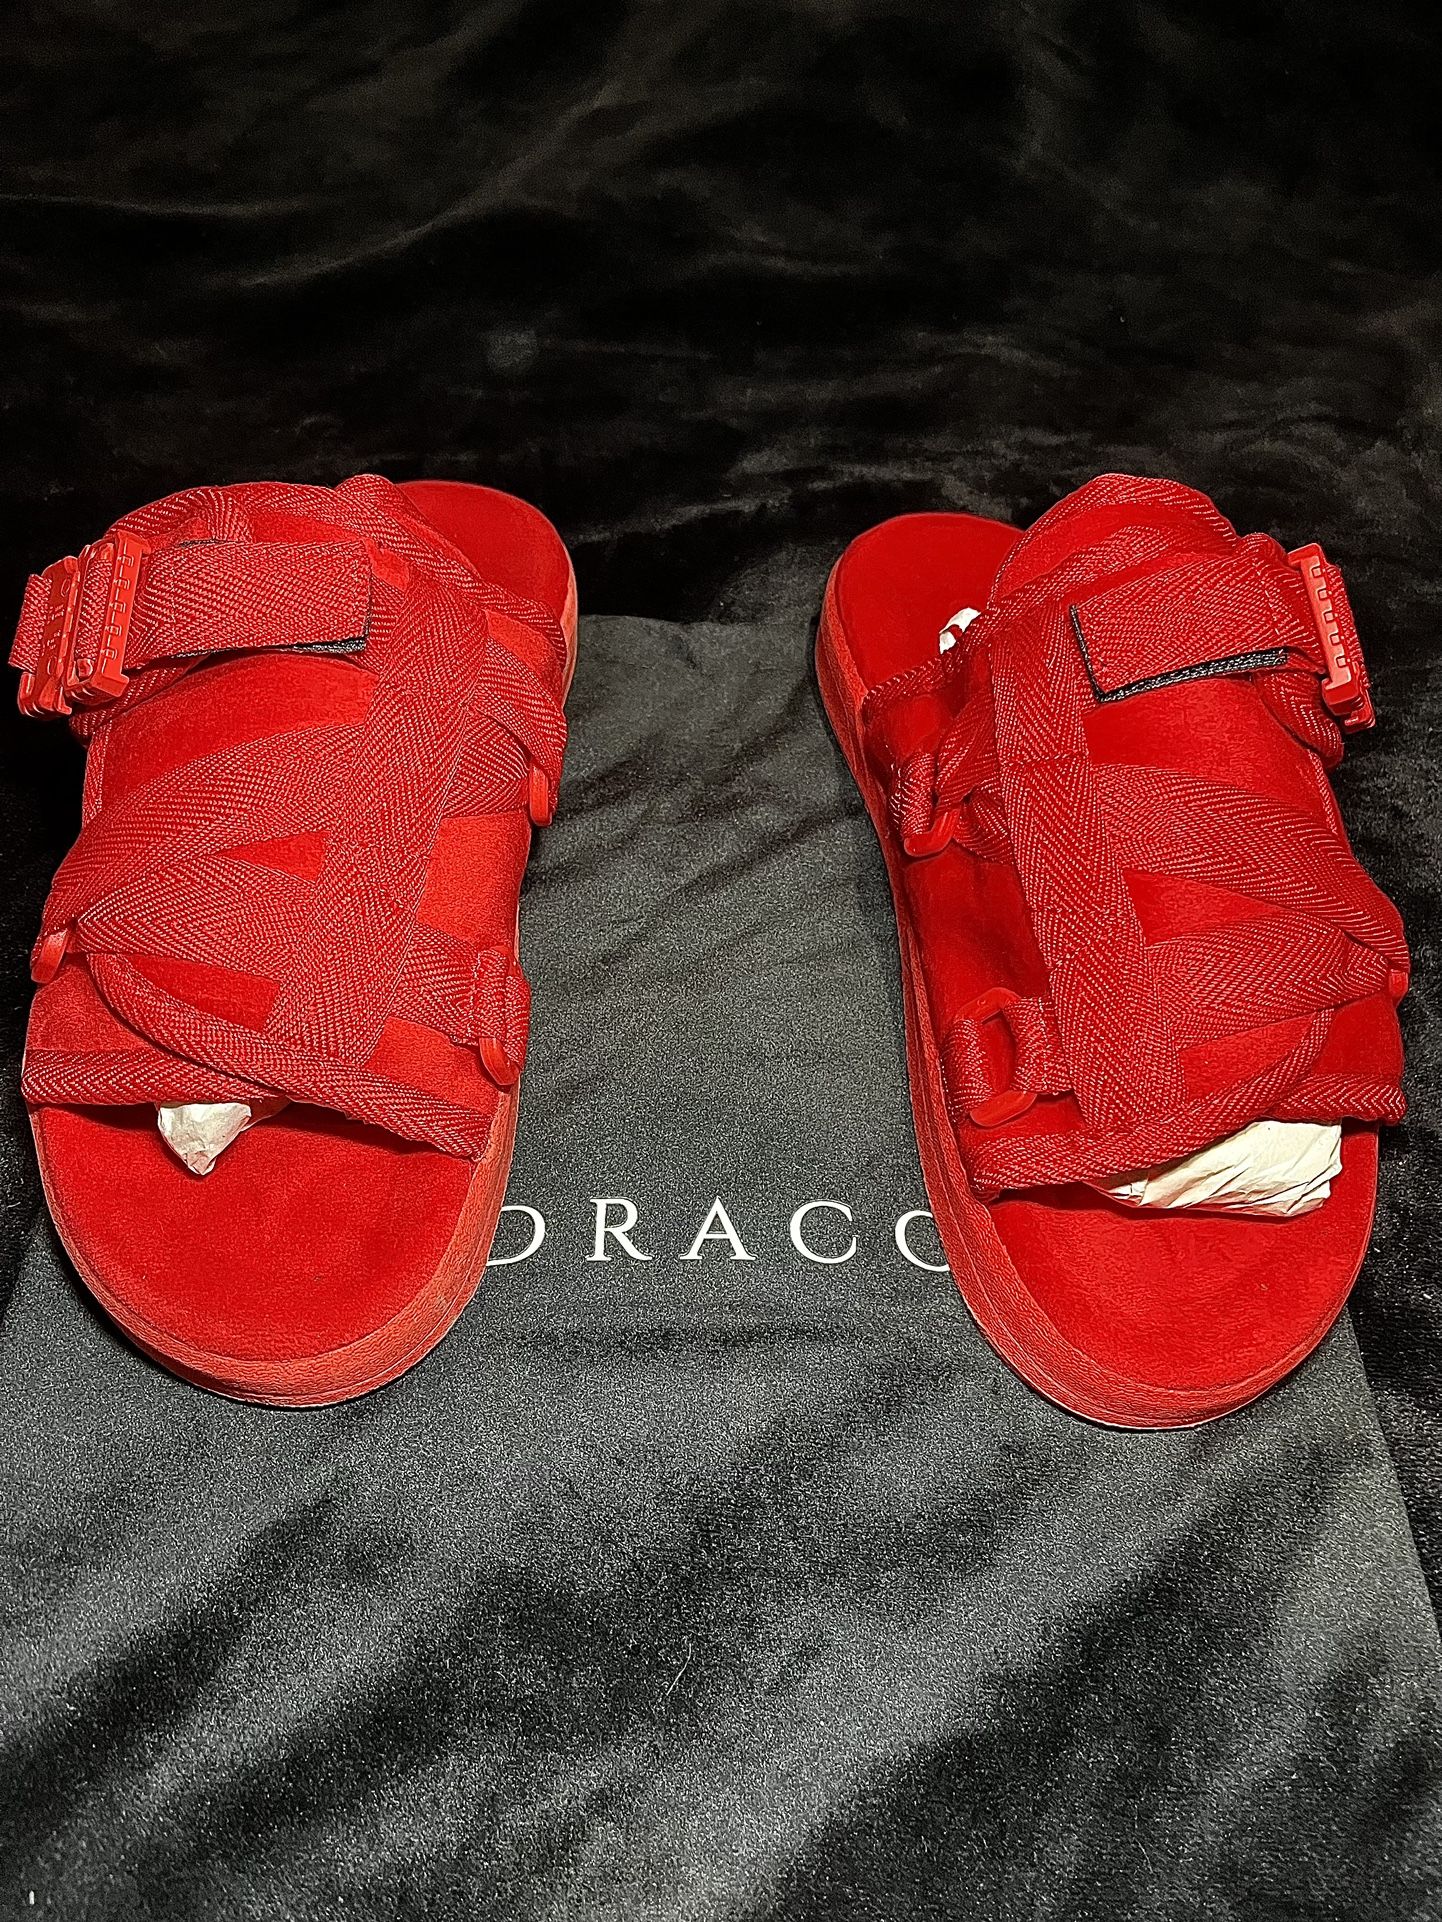 Draco Slides Remastered (RED)